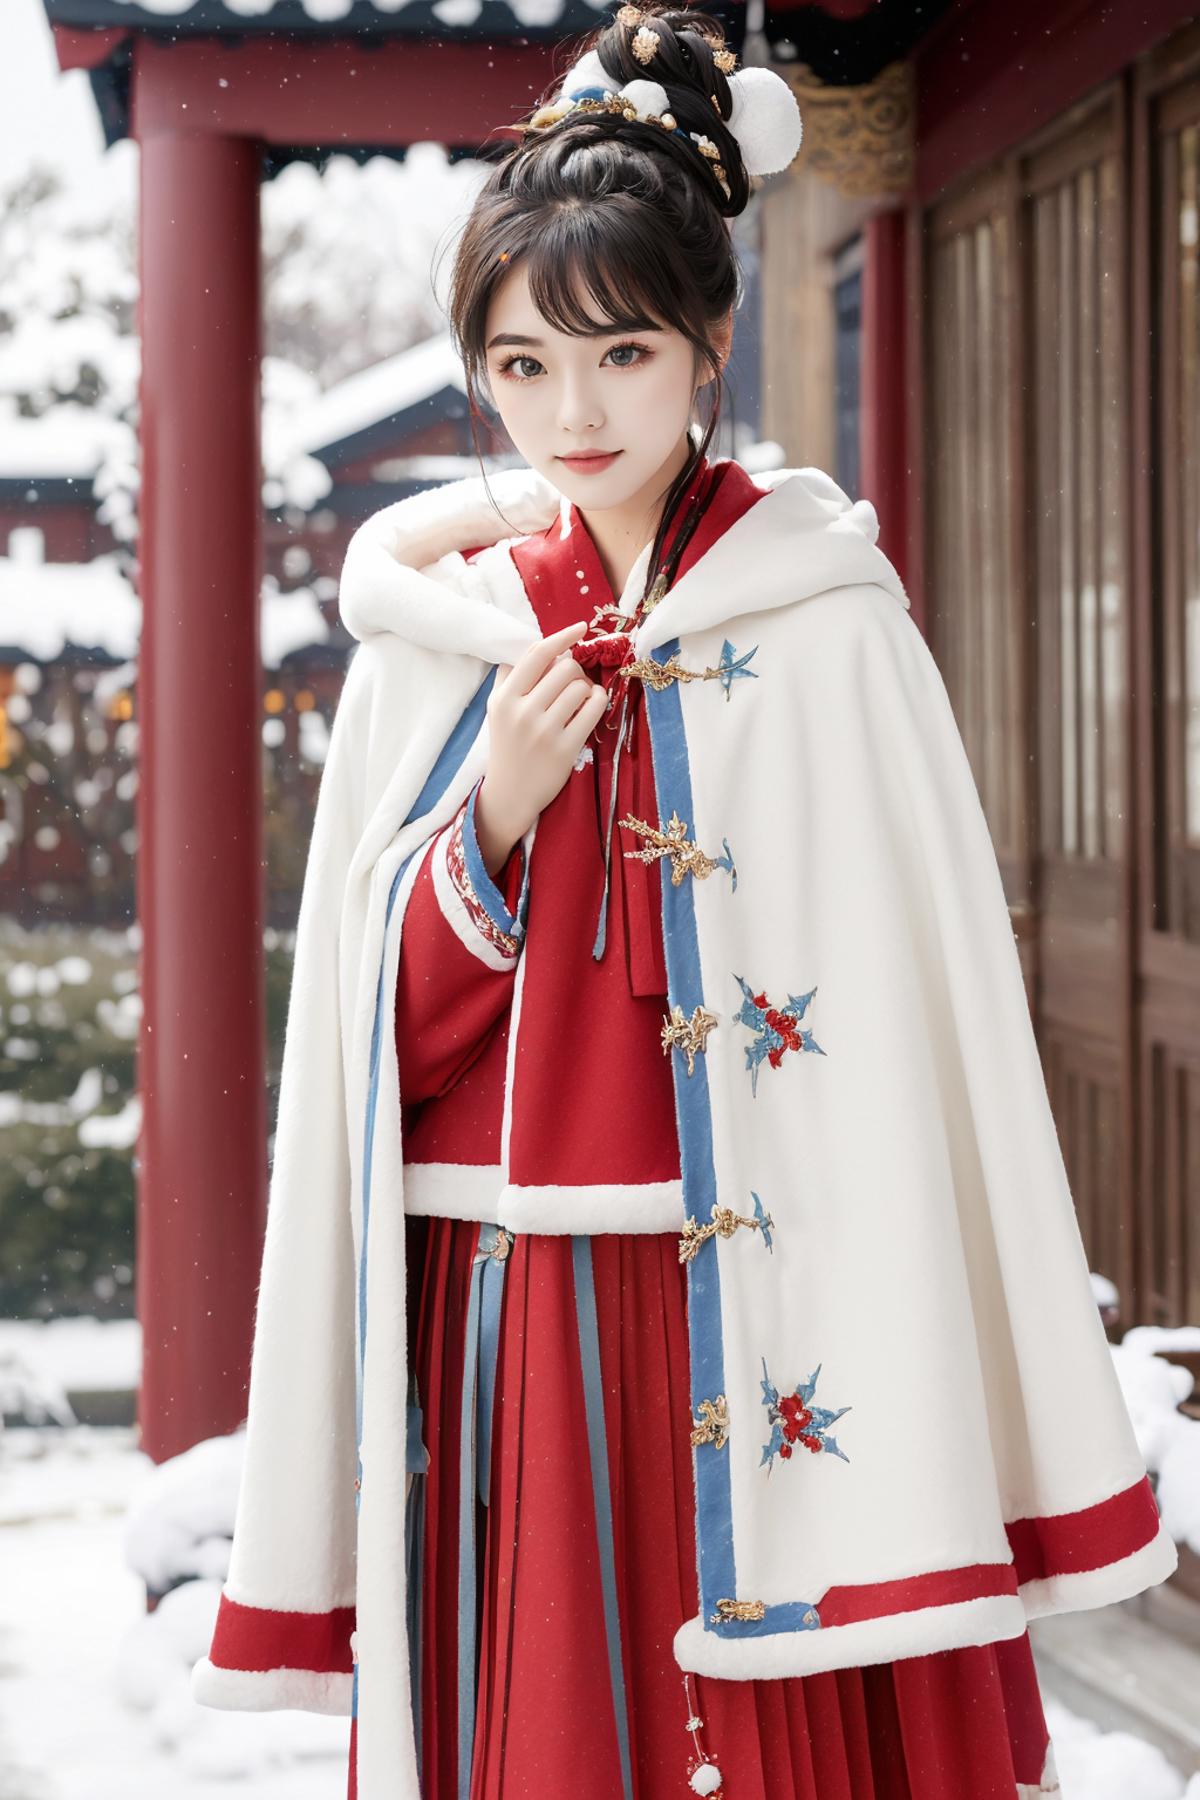 Winter Hanfu - Clothing LoRA image by buzimage